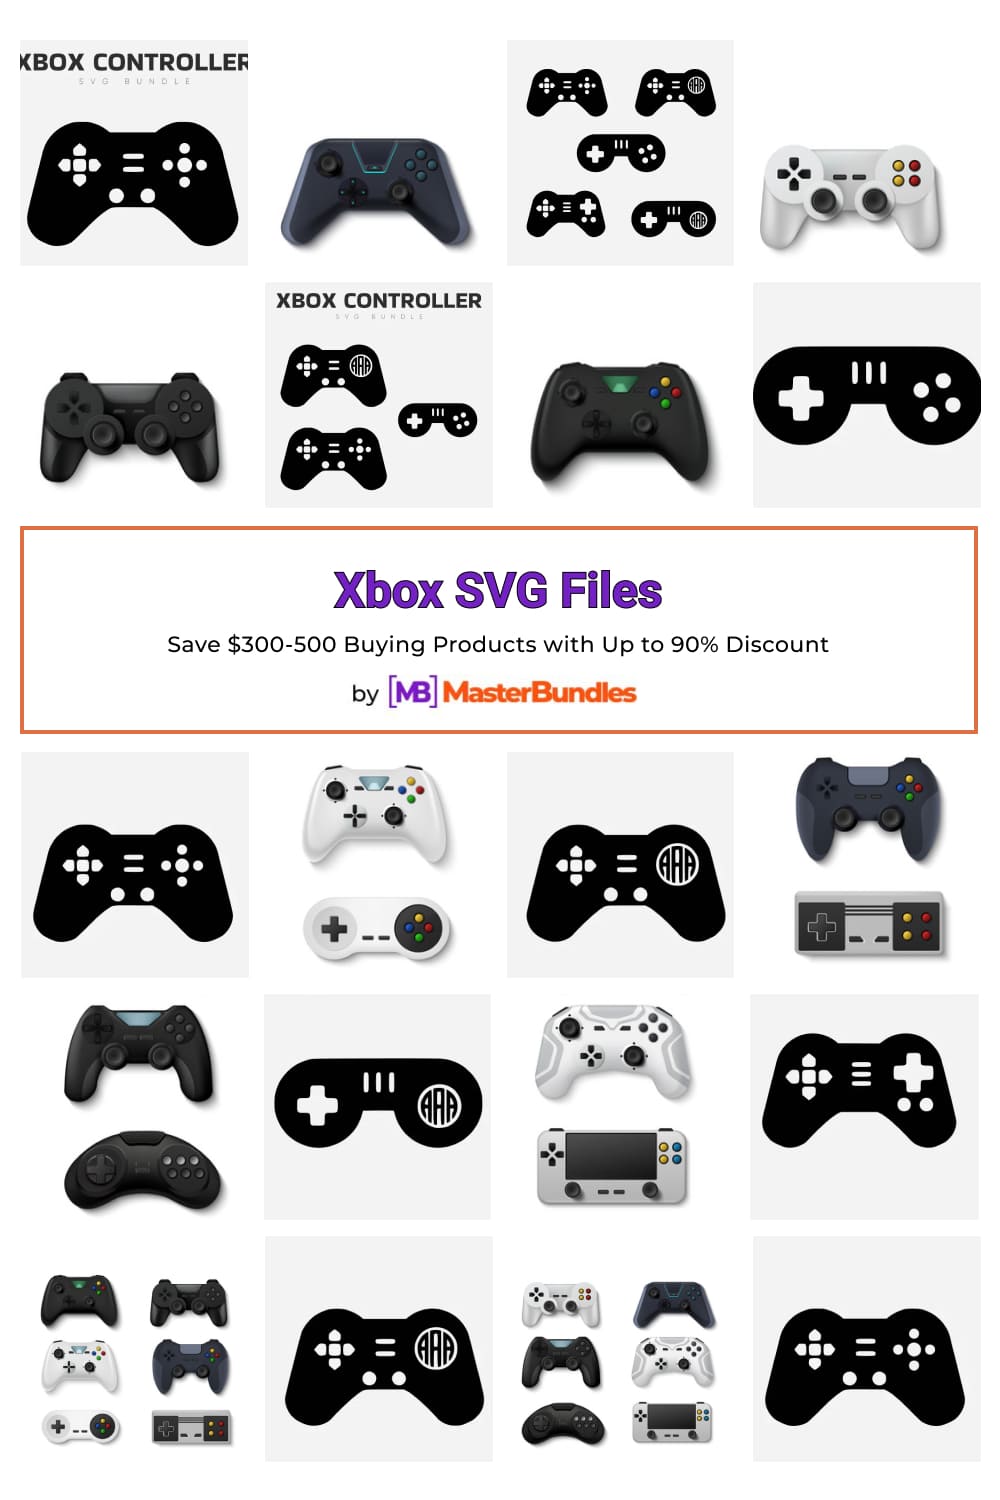 Xbox SVG Files Pinterest image.